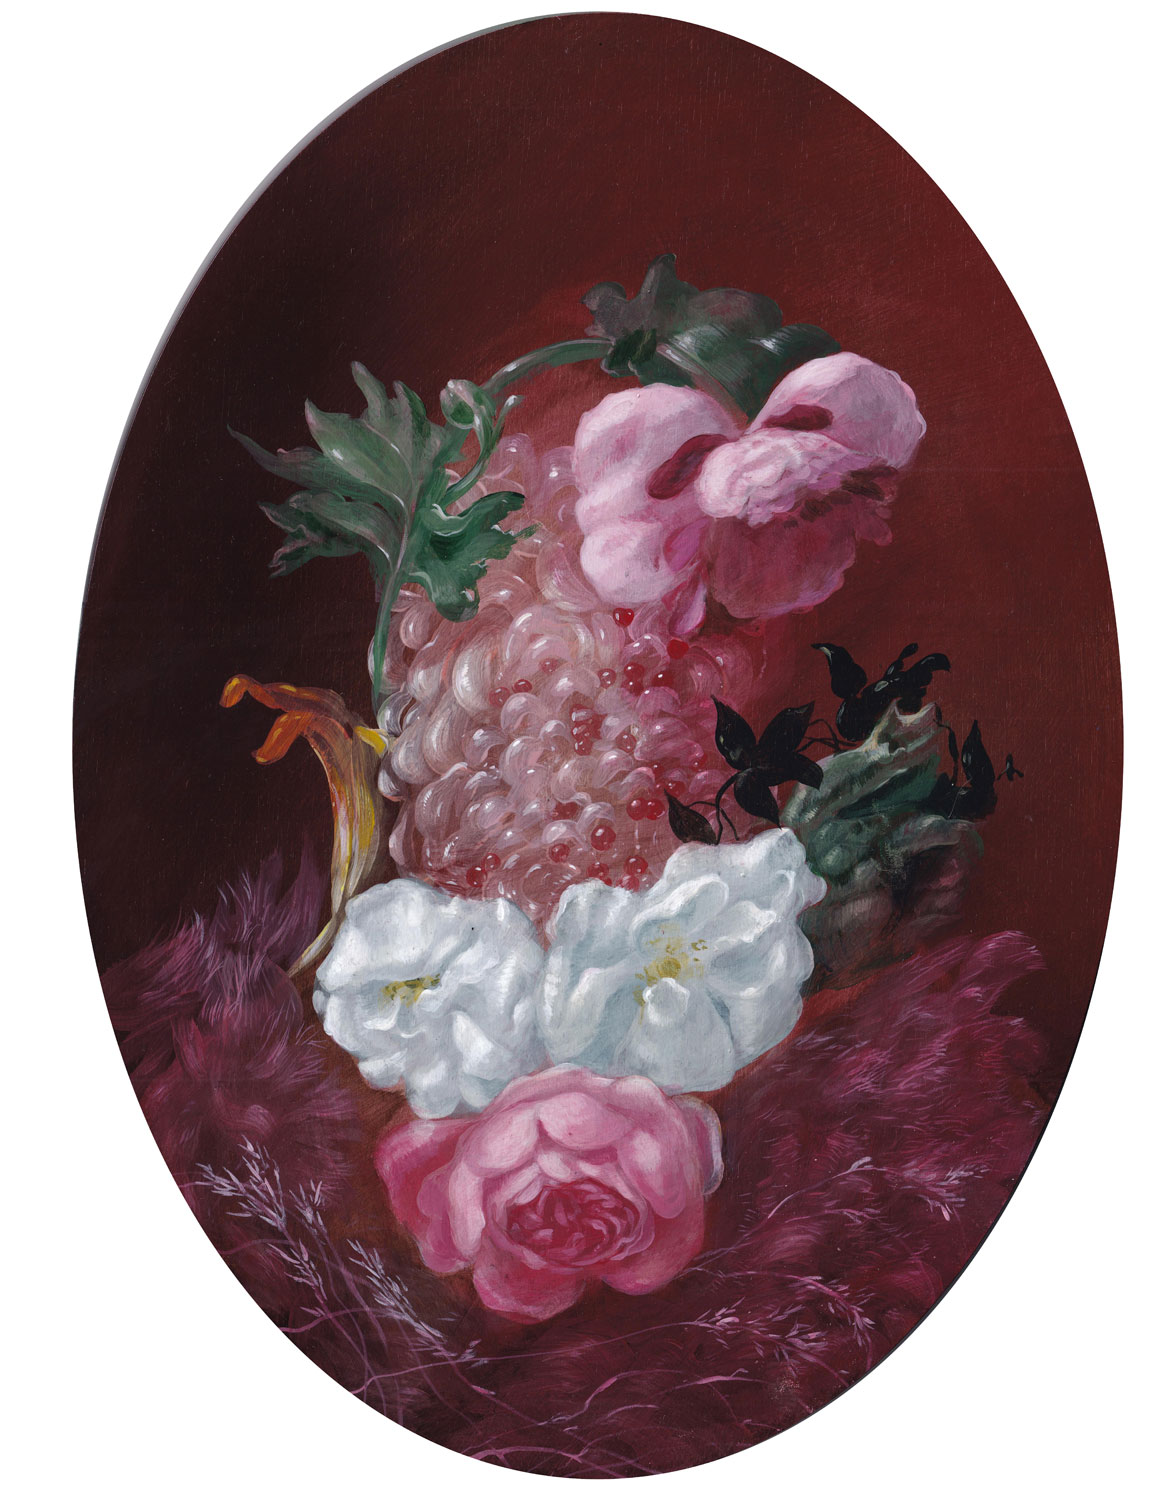 Nicole Duennebier, "Flower Effigy (2)," acrylic on panel.